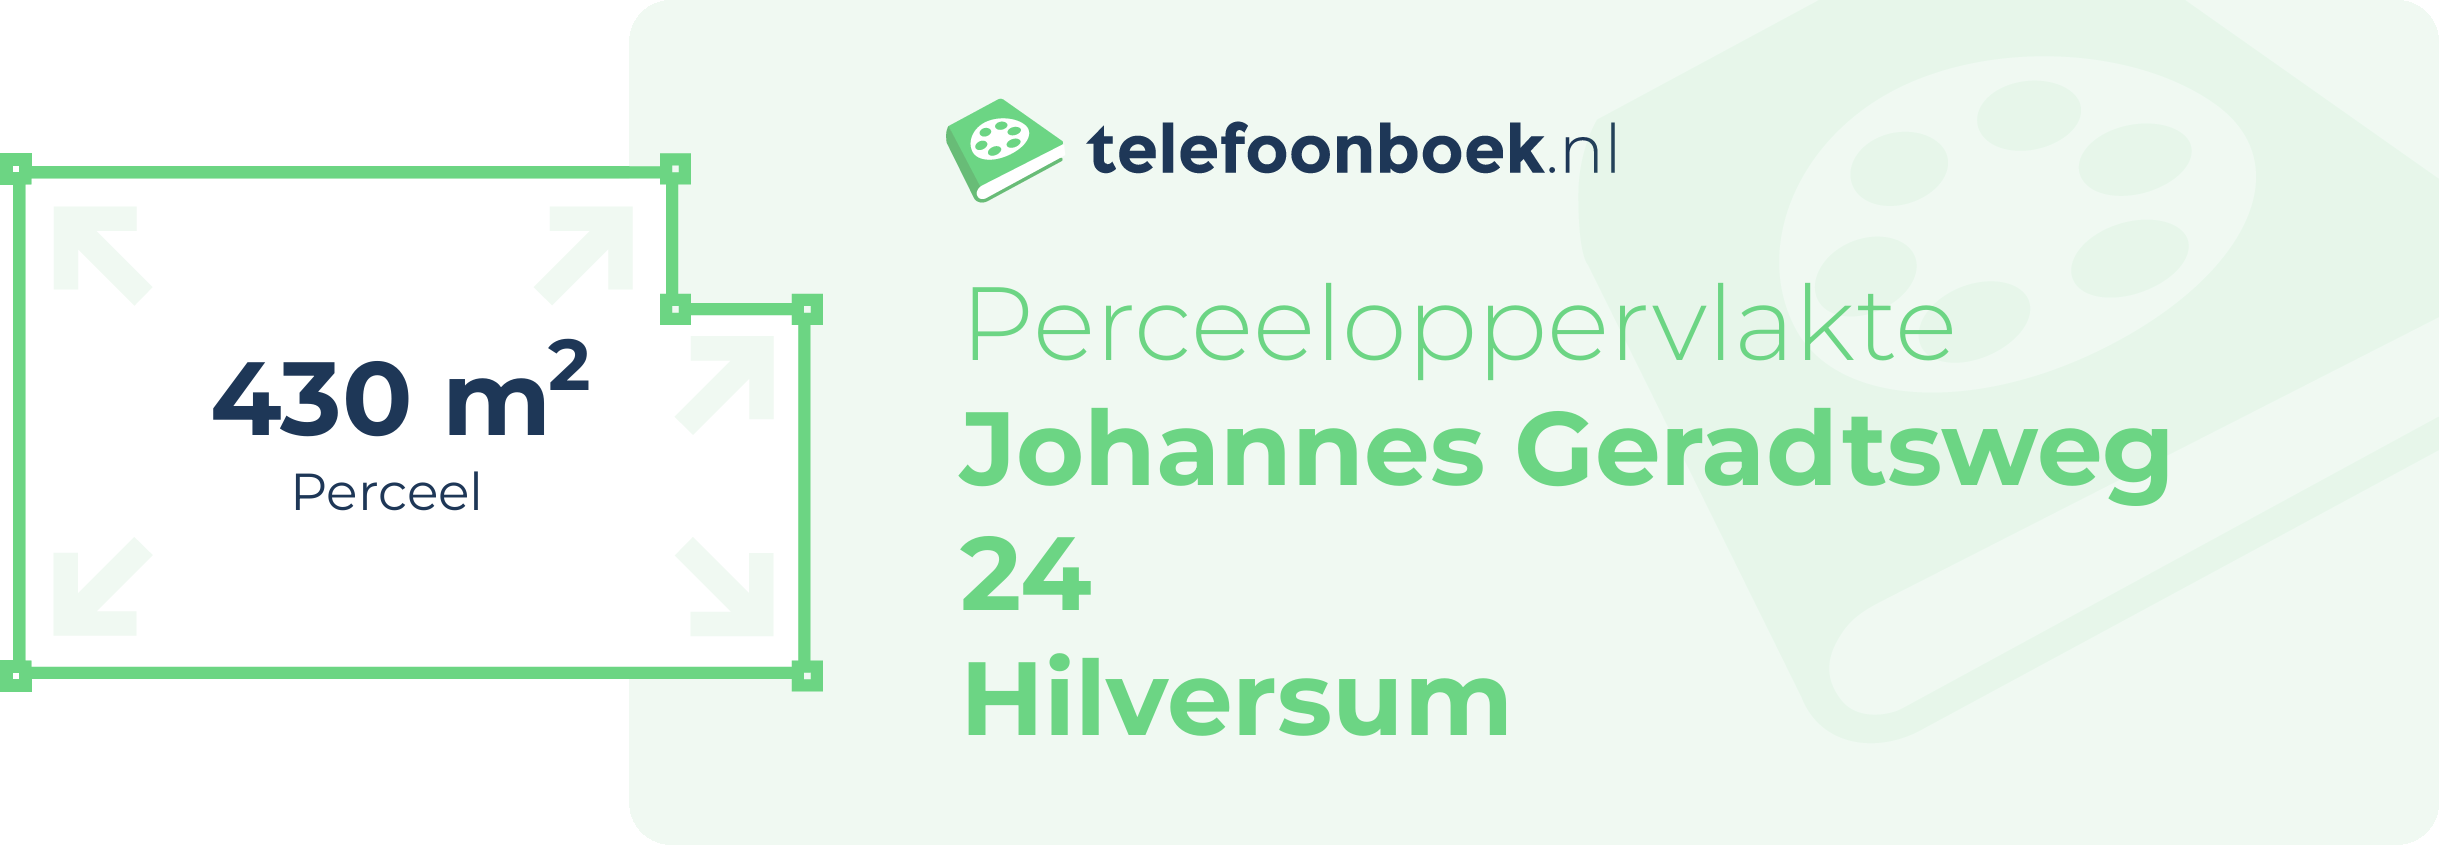 Perceeloppervlakte Johannes Geradtsweg 24 Hilversum